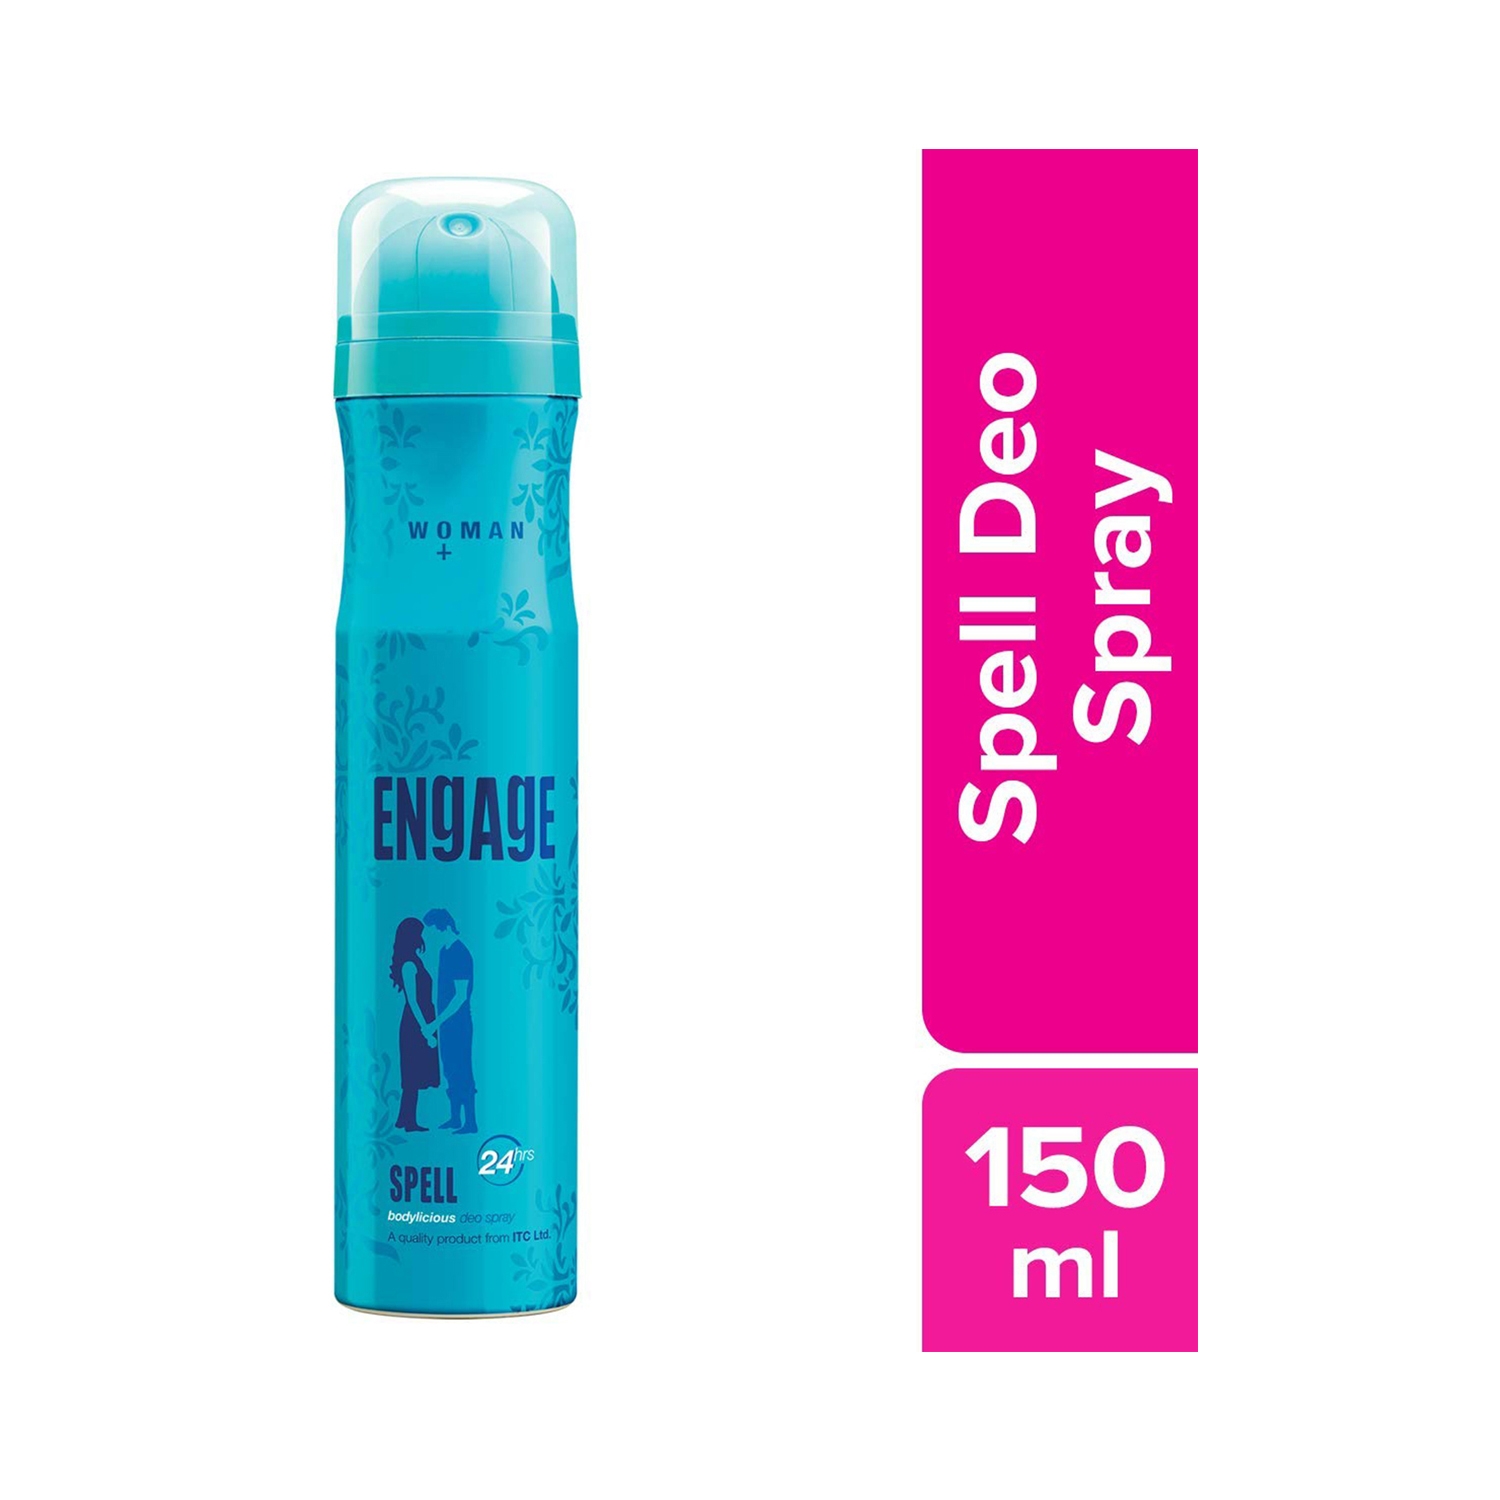 Engage Spell Deodorant Spray For Women (150ml)